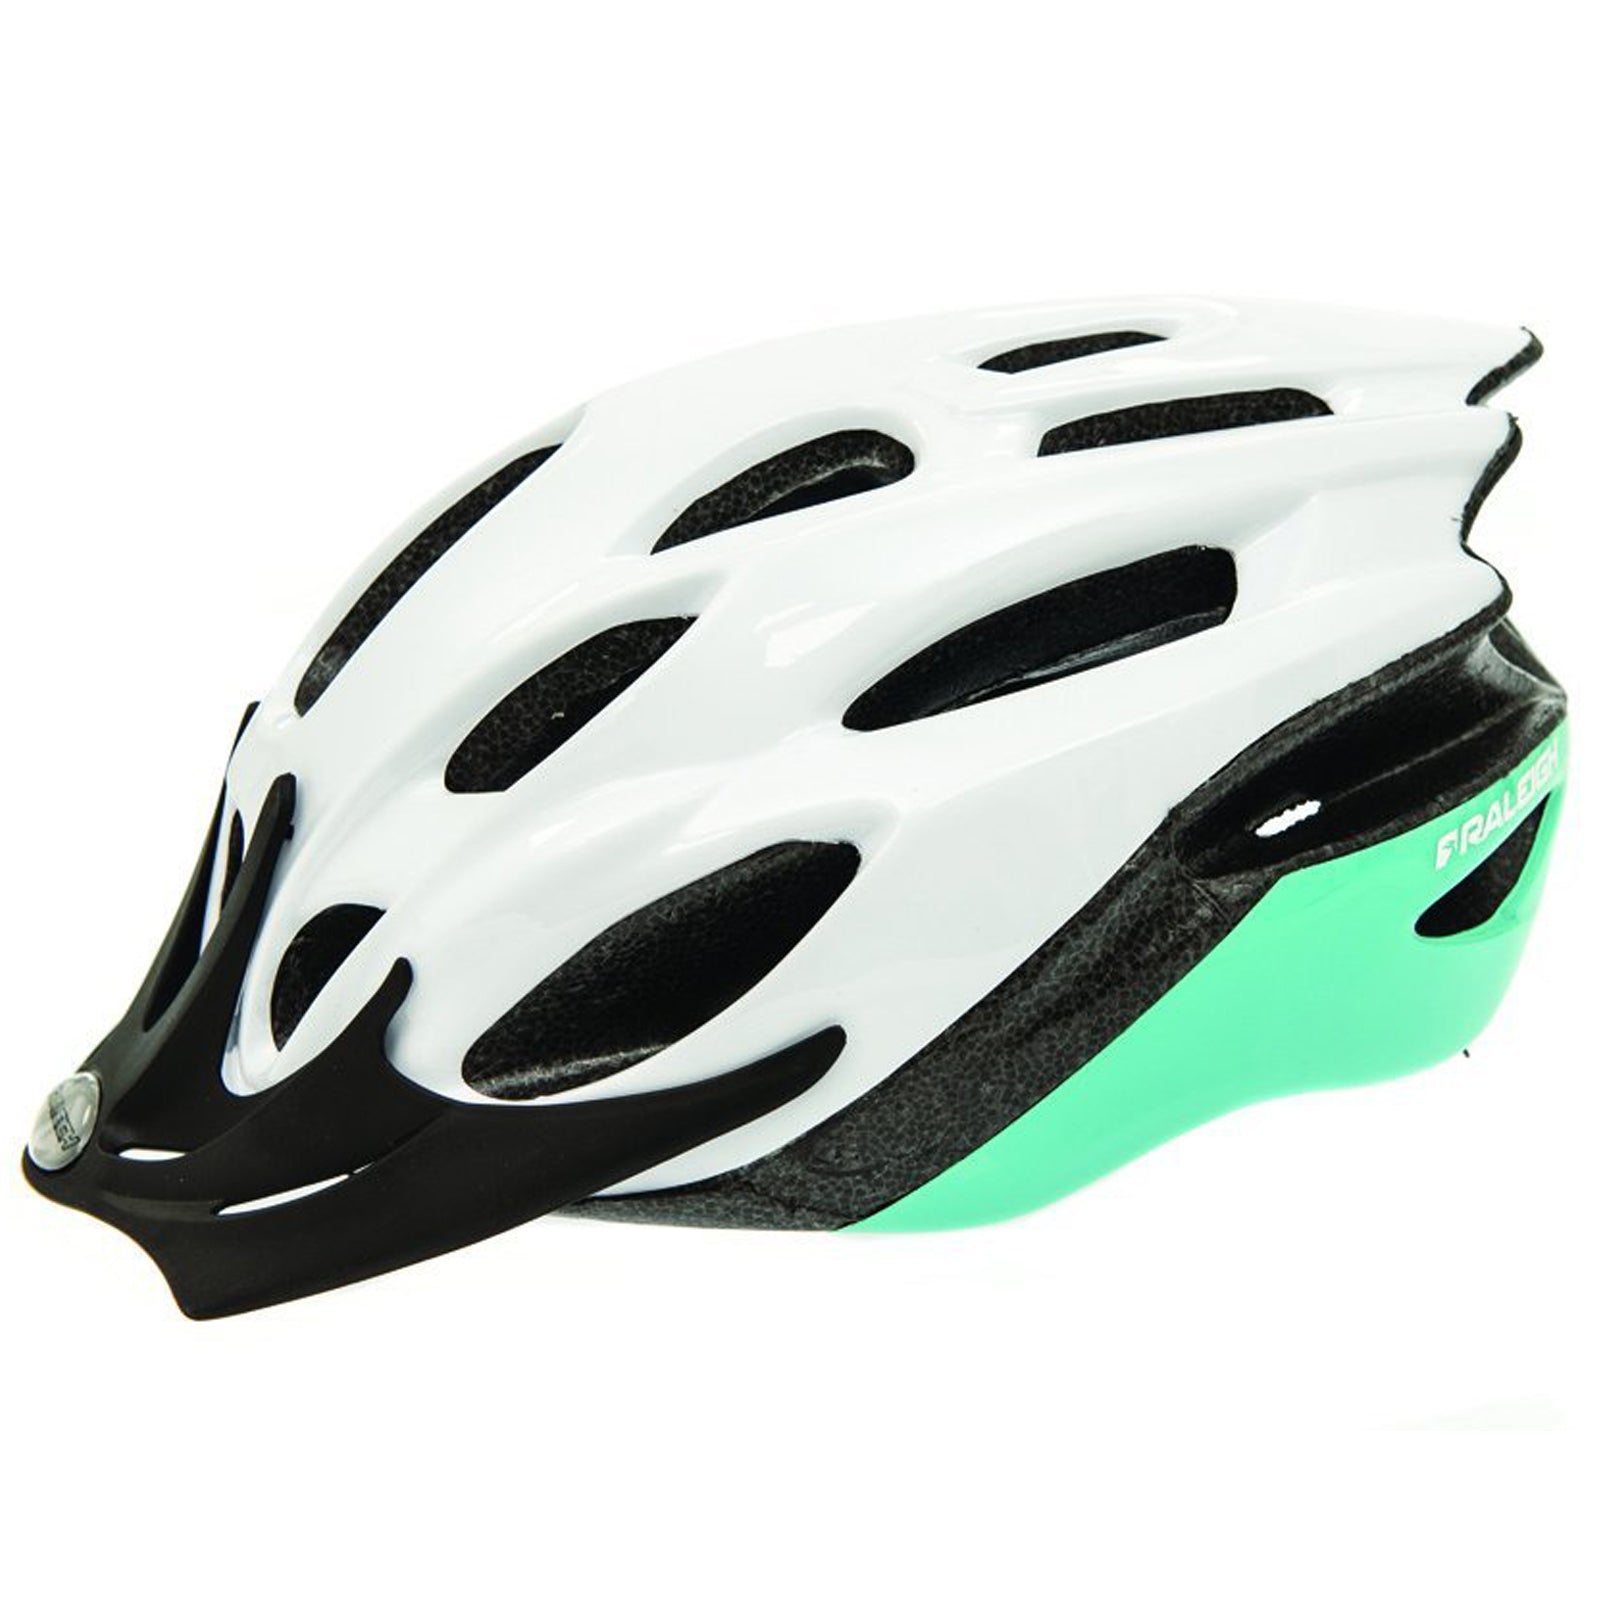 Raleigh Mission Evo Bike Helmet - 24 Vents - 54-58cm Medium - White/Mint Green Alternate 2